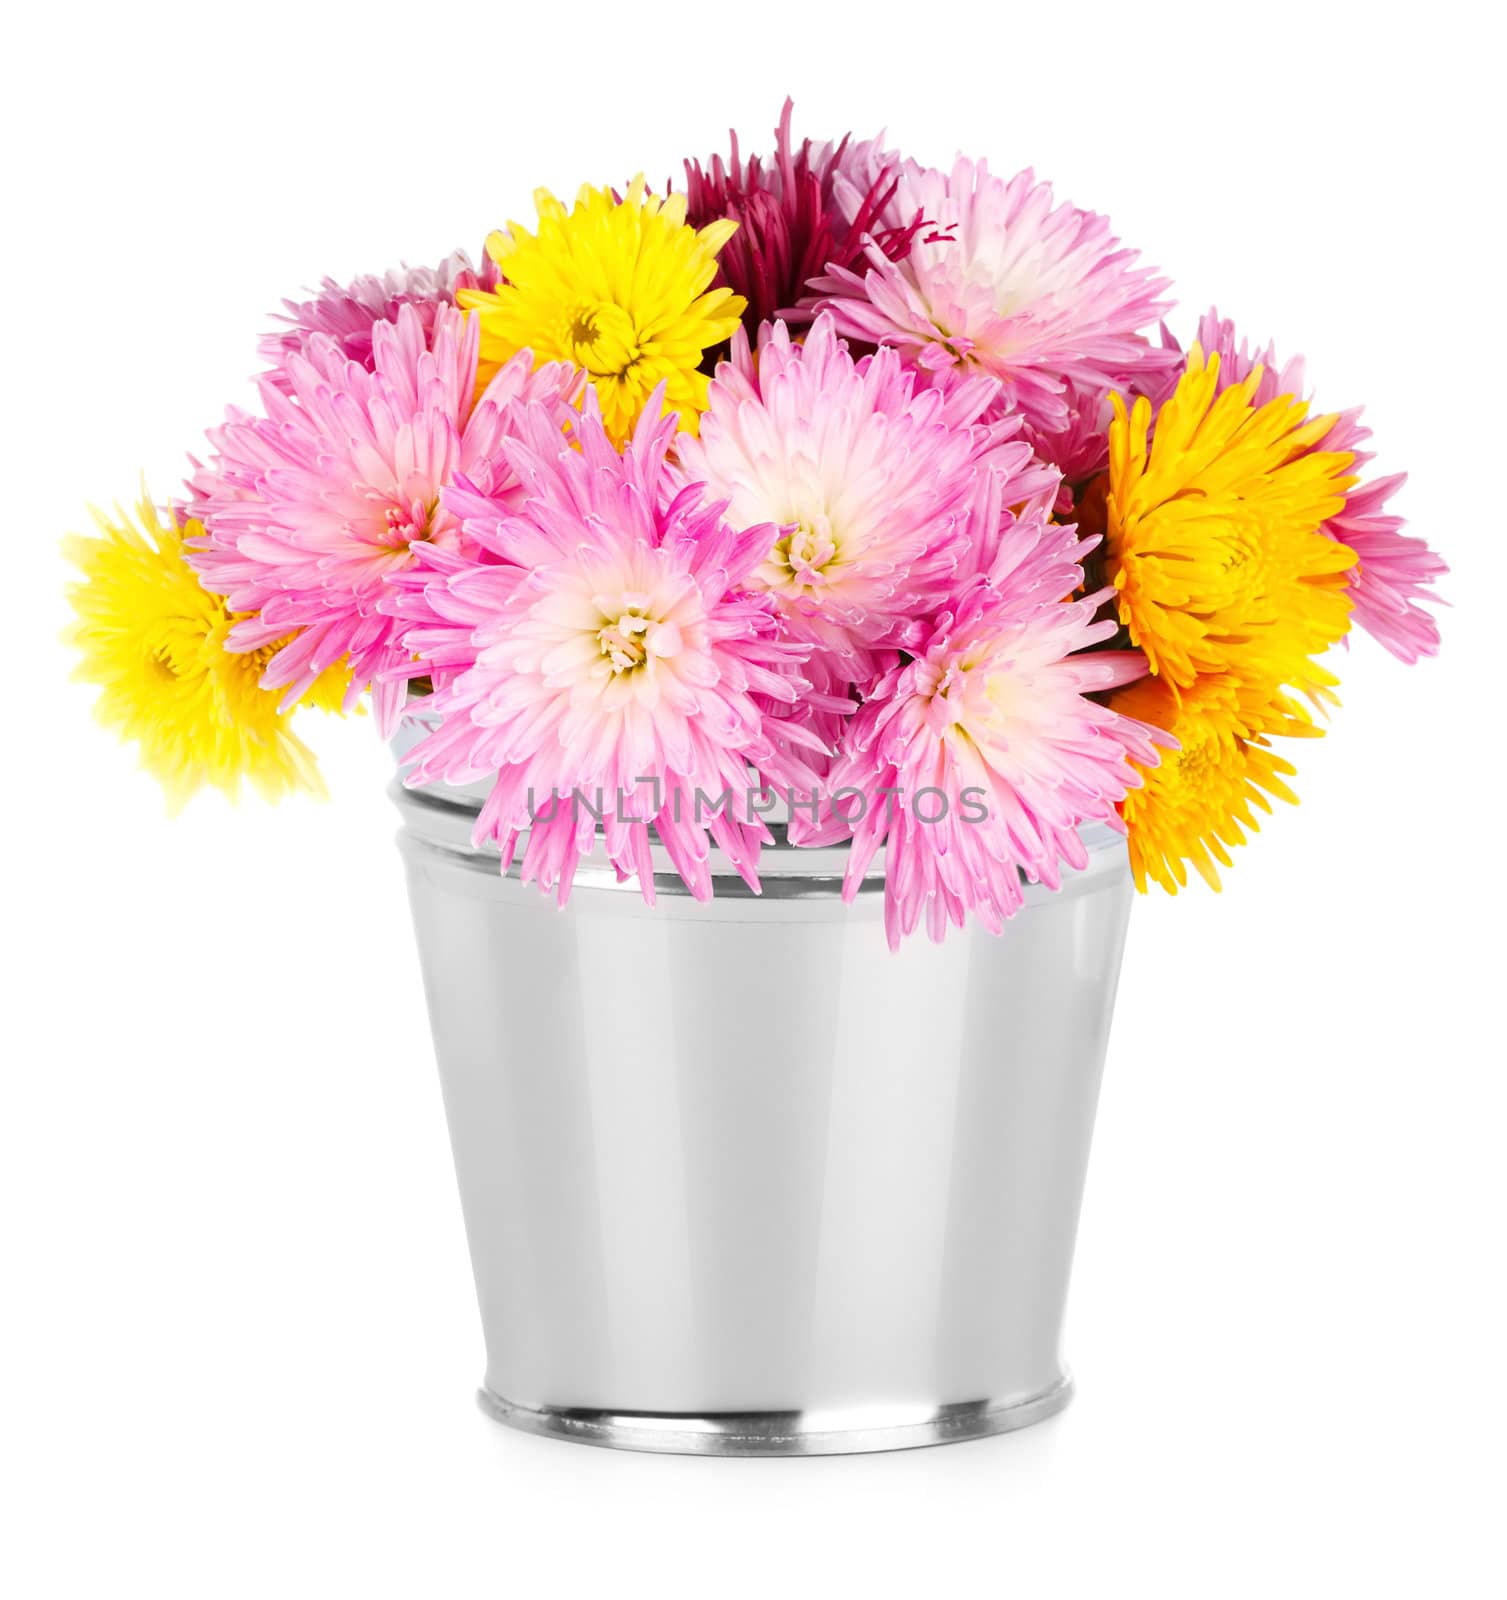 Chrysanthemum in bucket on white background